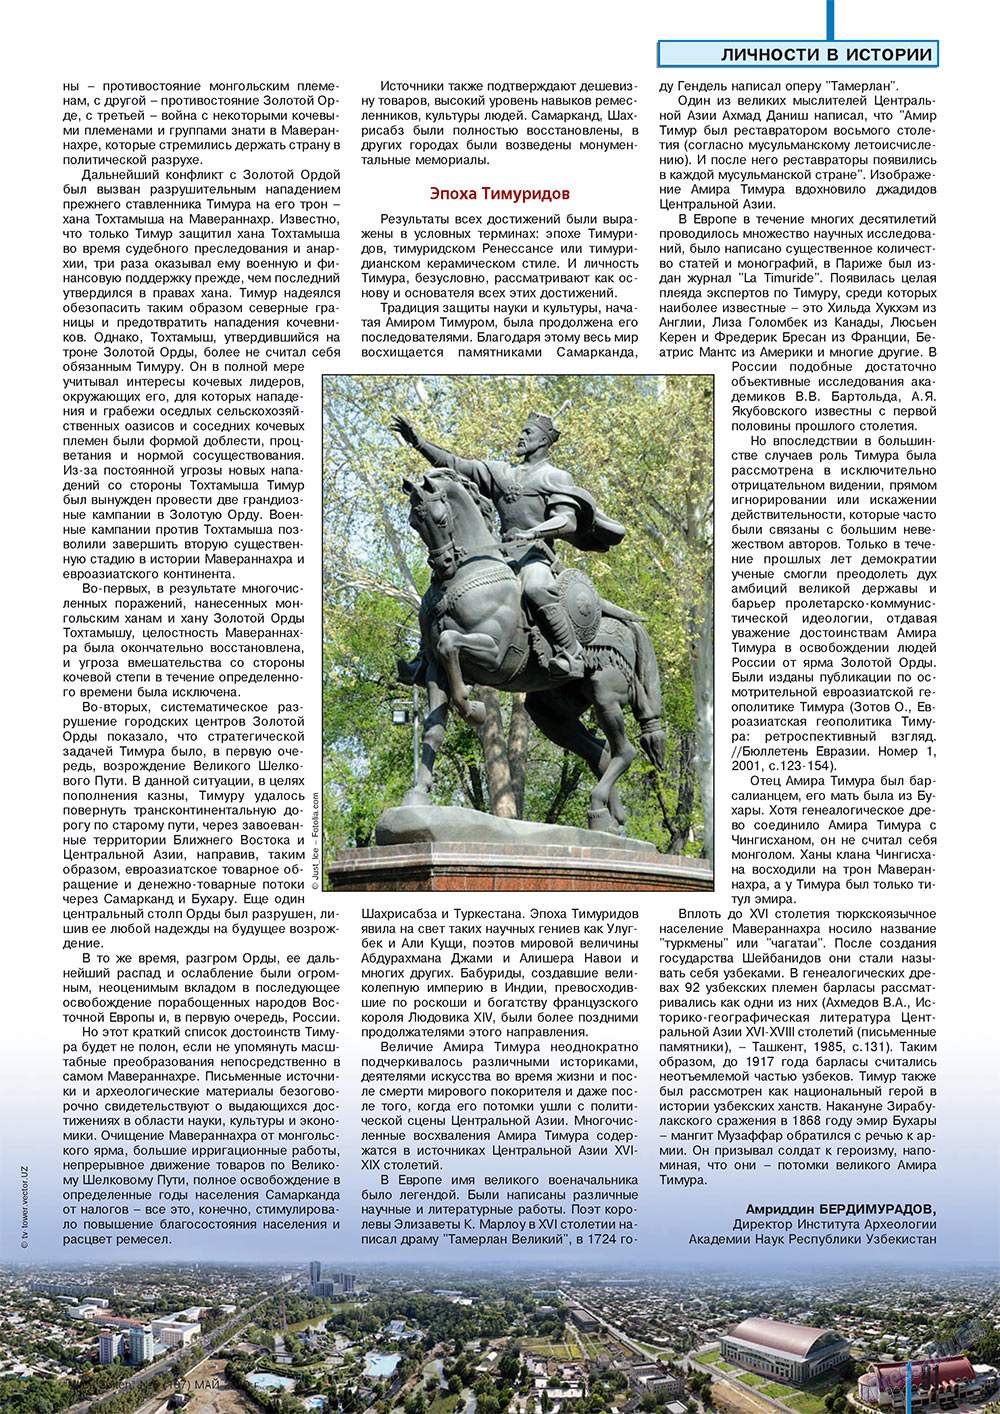 Neue Zeiten (журнал). 2010 год, номер 5, стр. 91